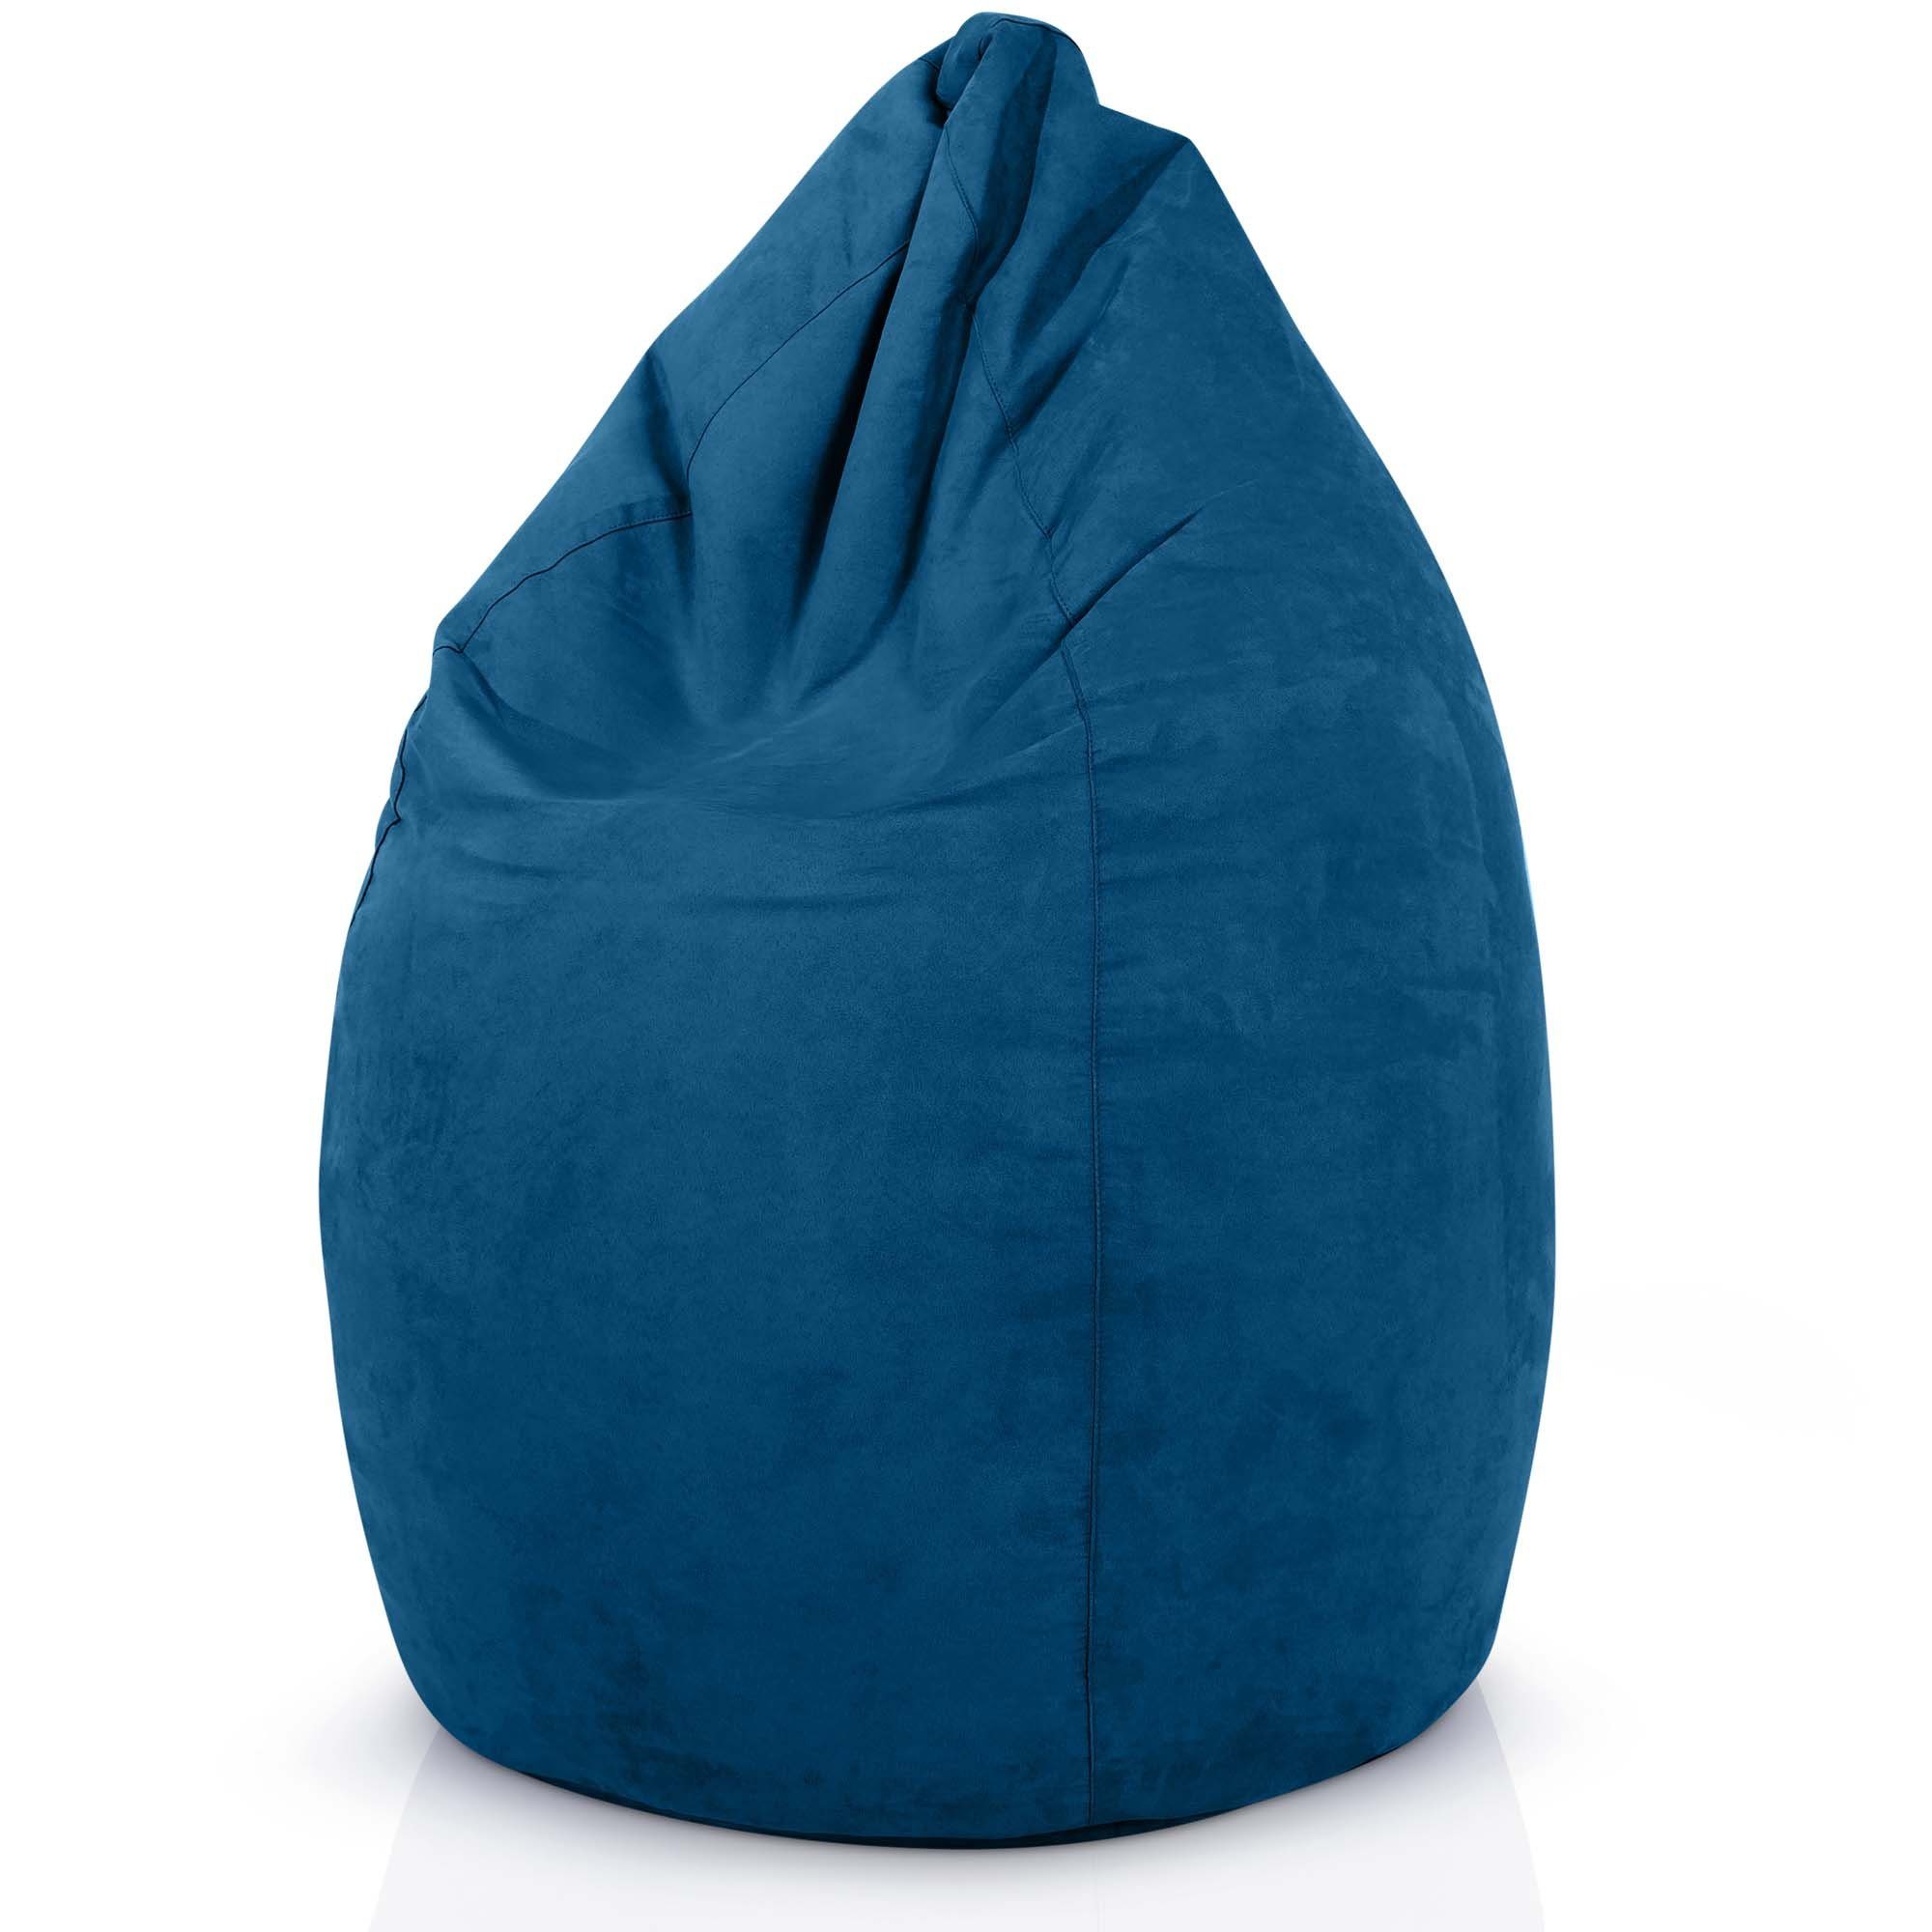 Green Bean Sitzsack Drop (Sitzsack mit Rückenlehne 60x60x90cm - Indoor Sitzkissen 220L Füllung, Kuschelig Waschbar), Bean Bag Bodenkissen Lounge Chair Sitzhocker Kindersitzsack blau